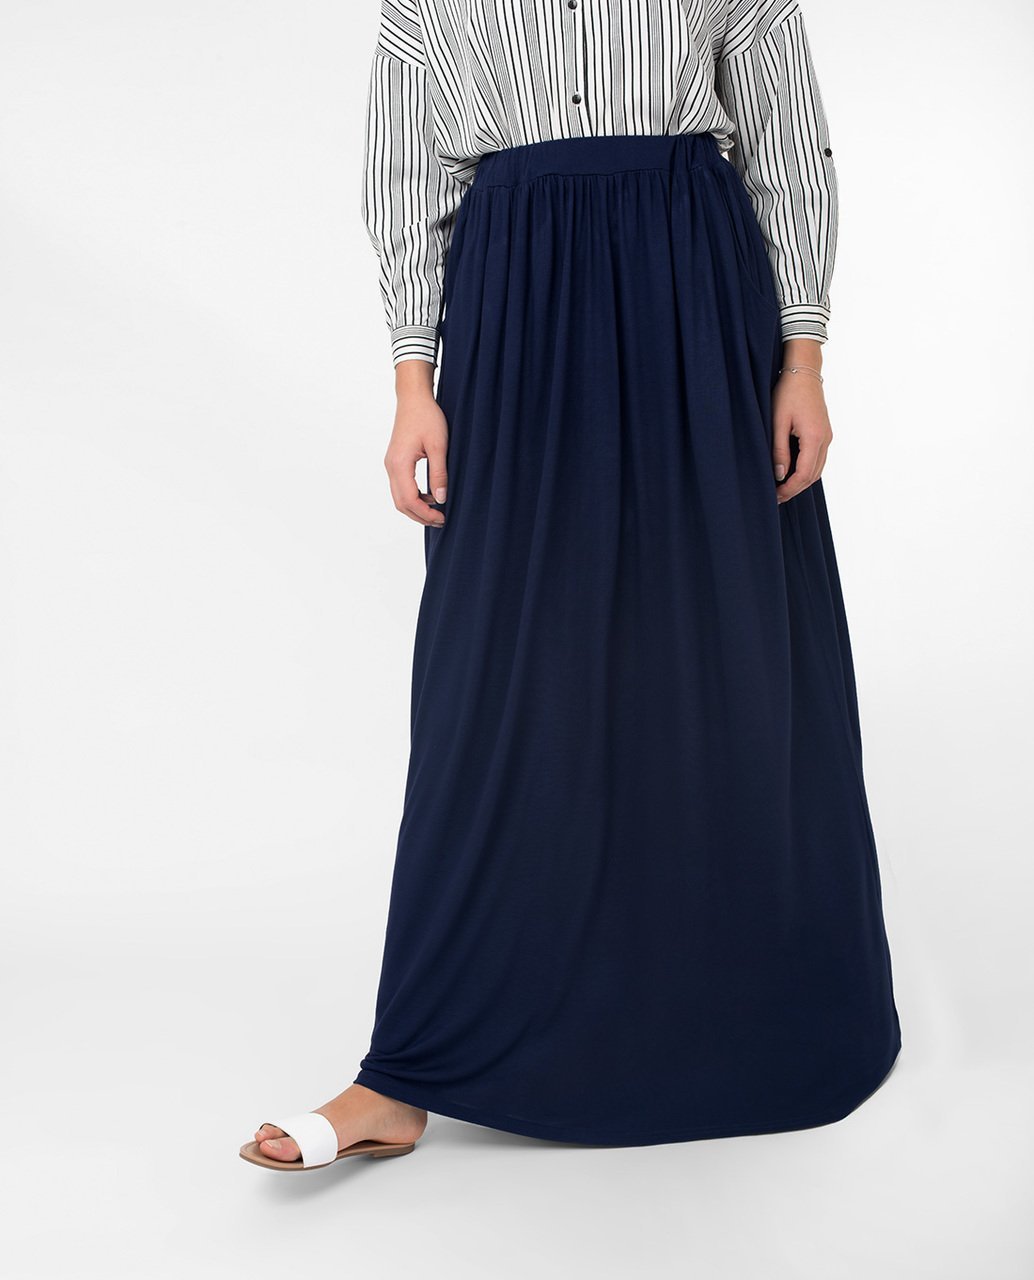 Fashion Women High Waist Pleated Long Maxi Skirts Muslim Lady Slim